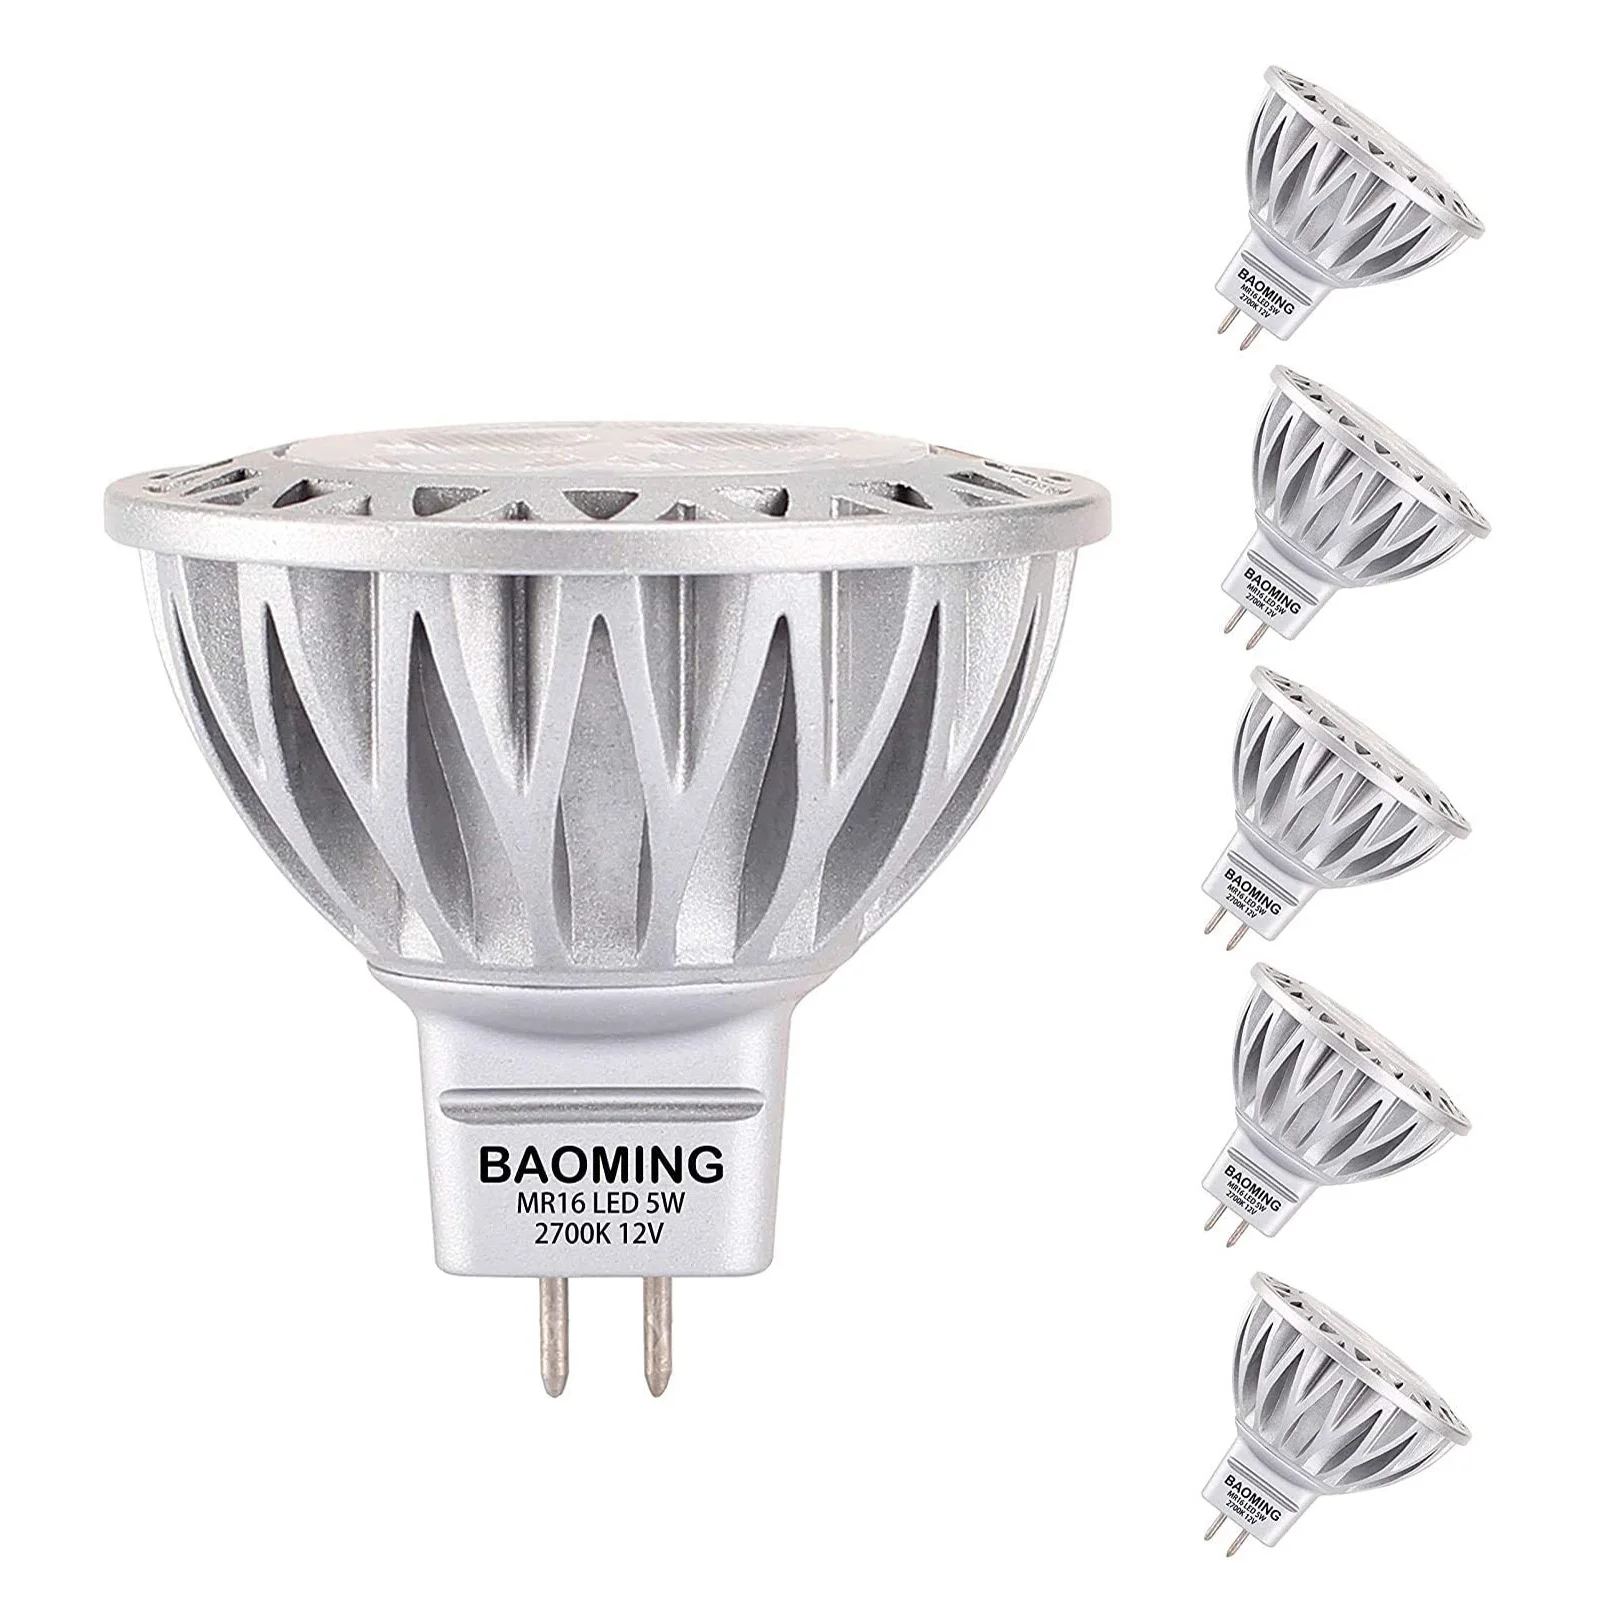 5W MR16 LED Bulbs lamp SpotLight GU5.3 2700K AC/DC12V home and office COB light 